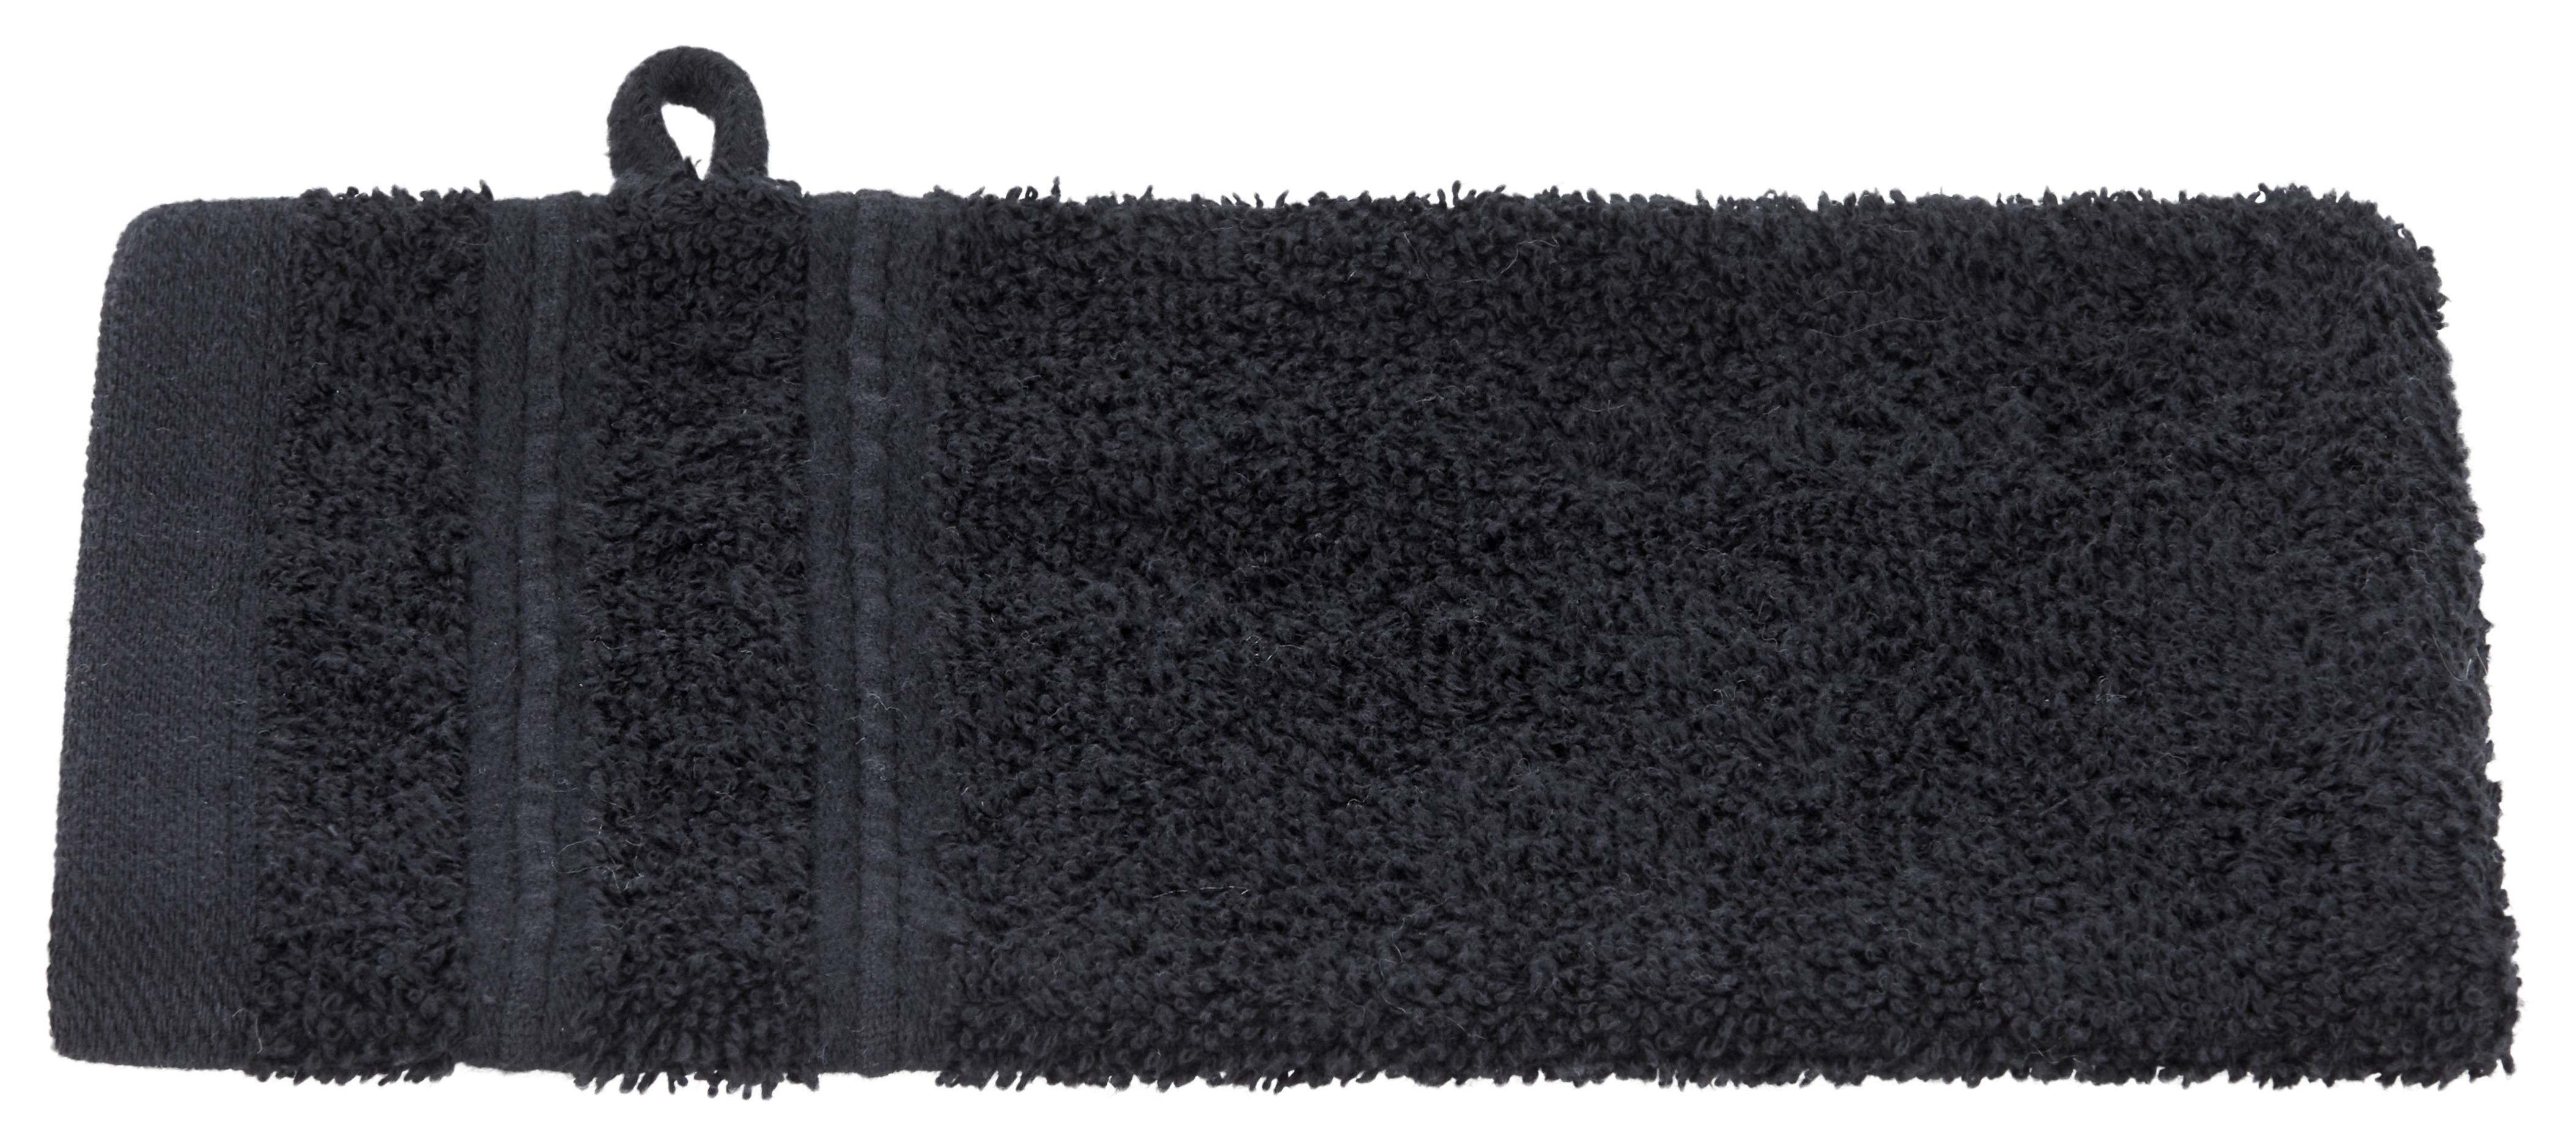 Krpica Za Umivanje Melanie - črna, tekstil (16/21cm) - Modern Living